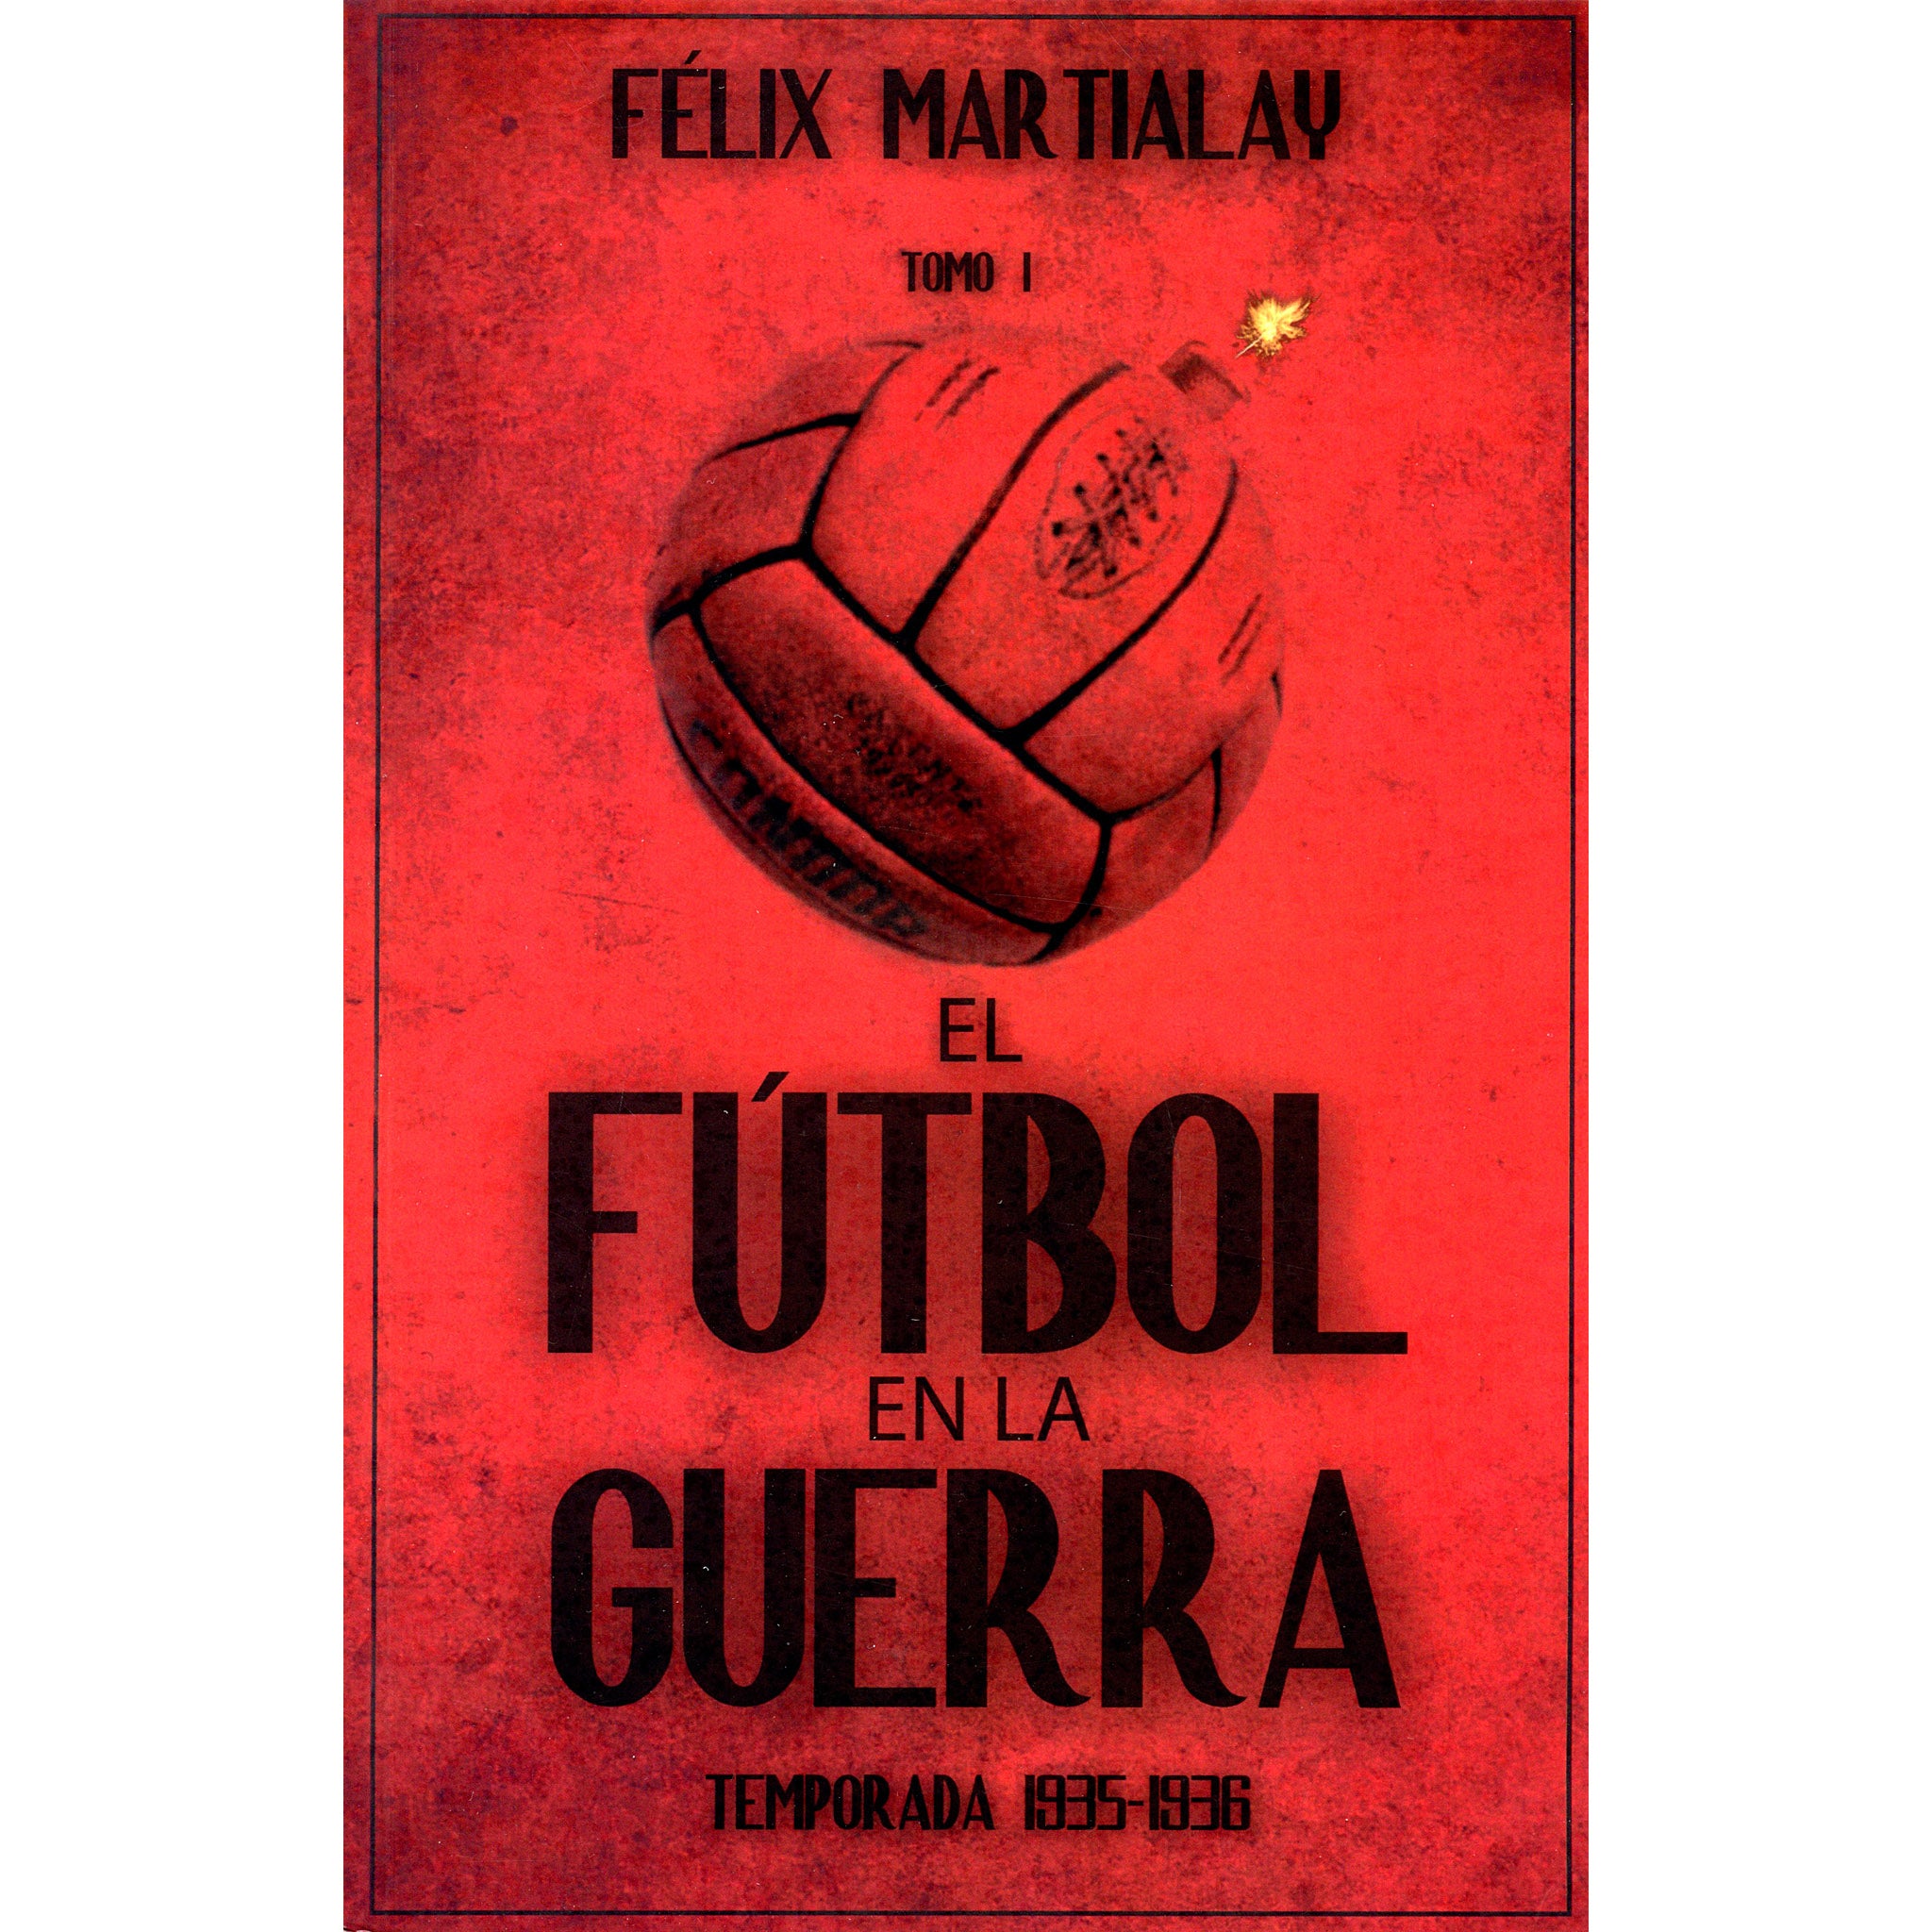 El Futbol en la Guerra Tomo I – Temporada 1935-1936 (Spanish Civil War History Volume 1)